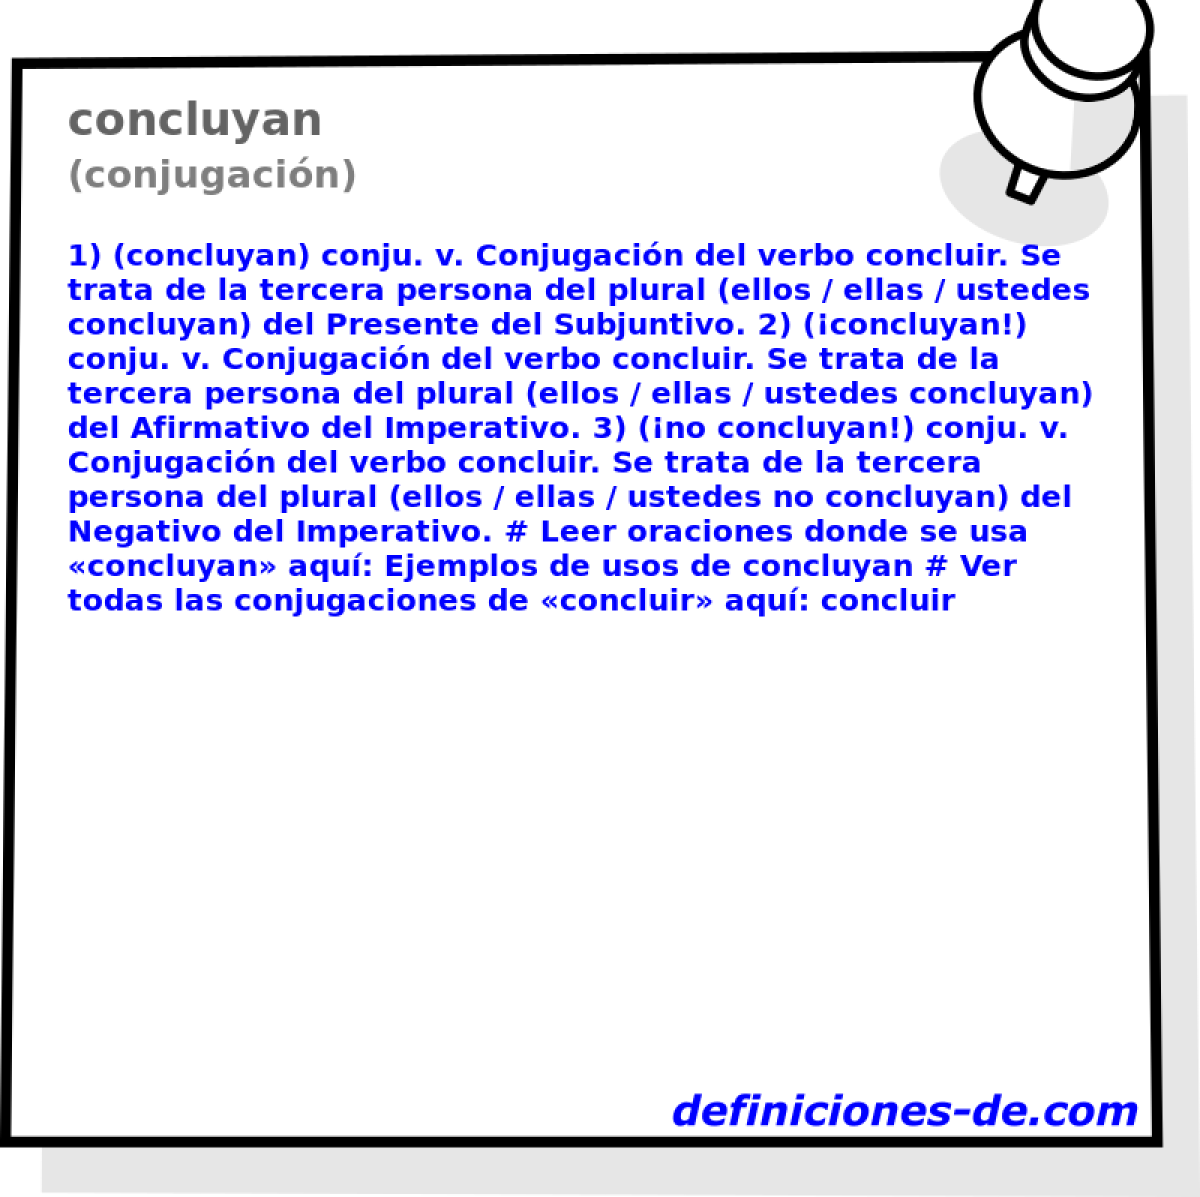 concluyan (conjugacin)